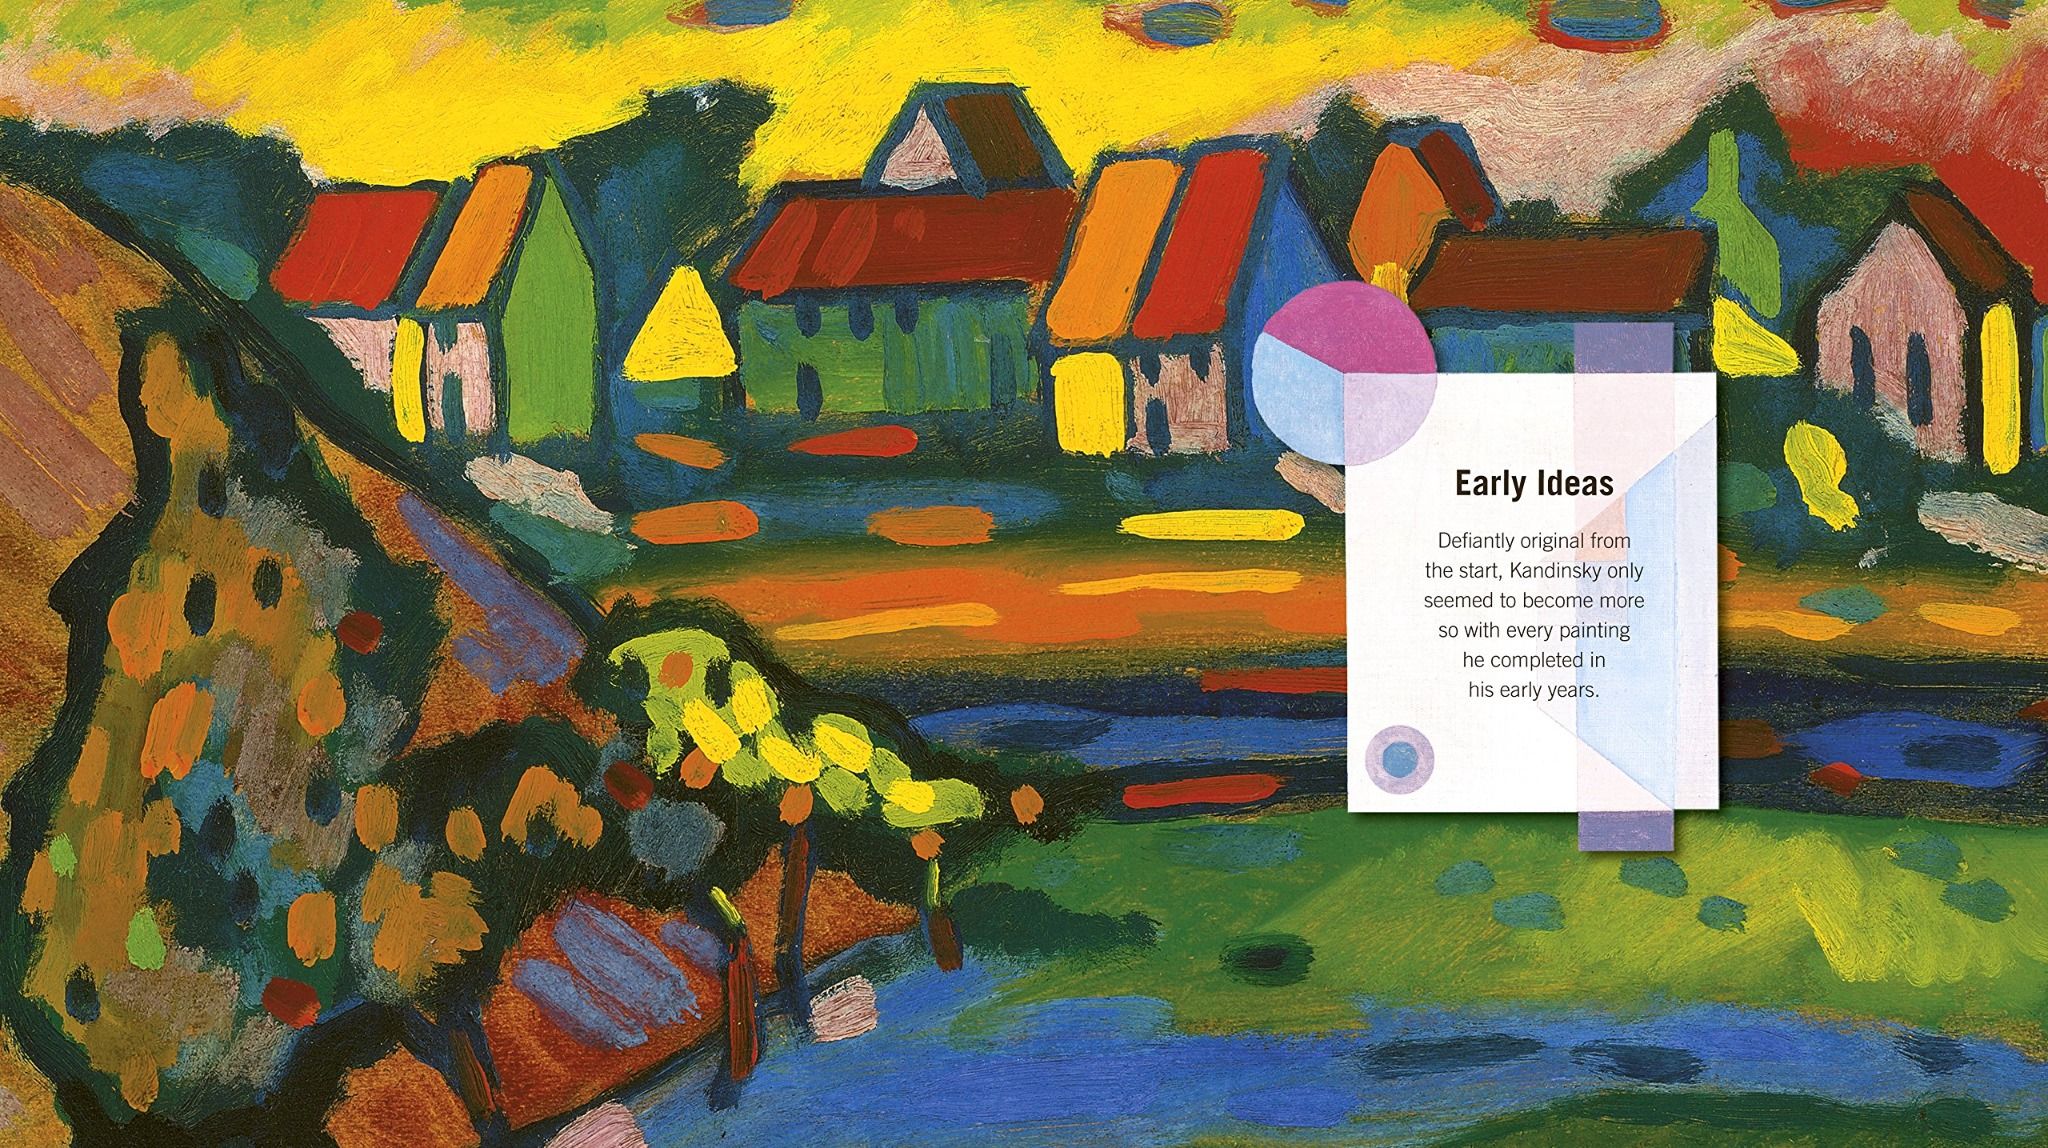  Wassily Kandinsky Masterpieces of Art_Michael Kerrigan_9781783612154_Flame Tree Publishing 